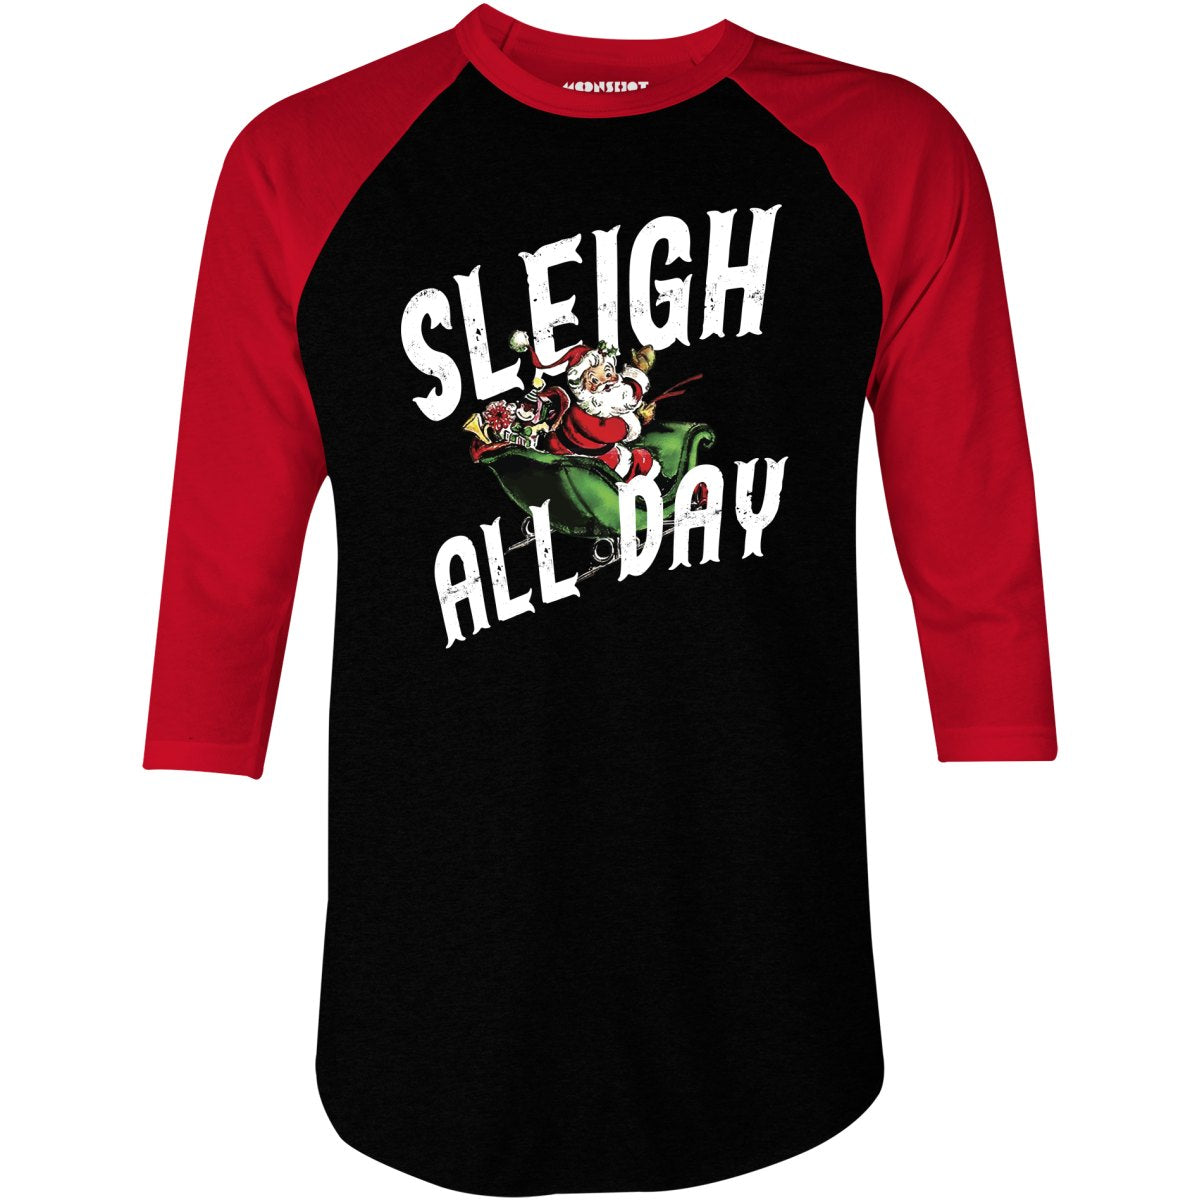 Sleigh All Day - 3/4 Sleeve Raglan T-Shirt